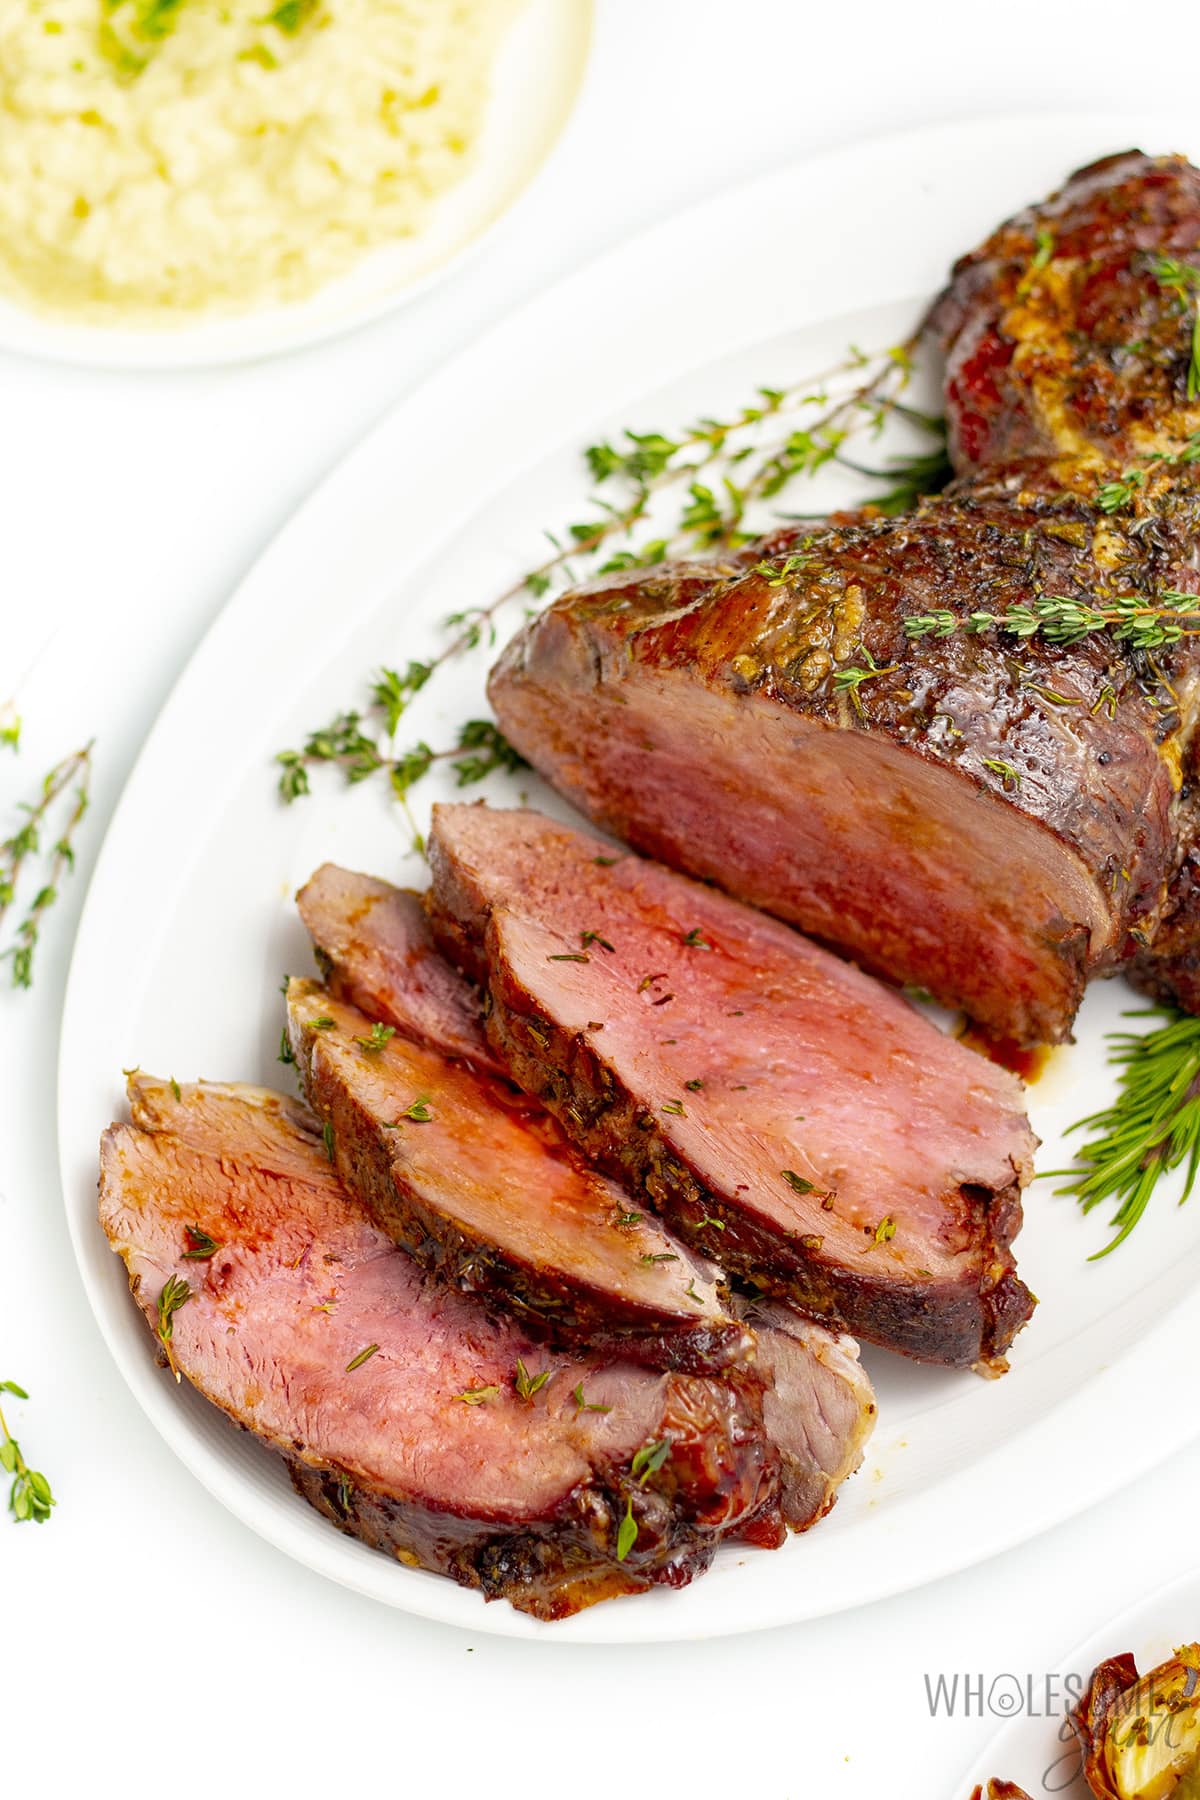 Sliced boneless leg of lamb on a serving platter with herb garnish.